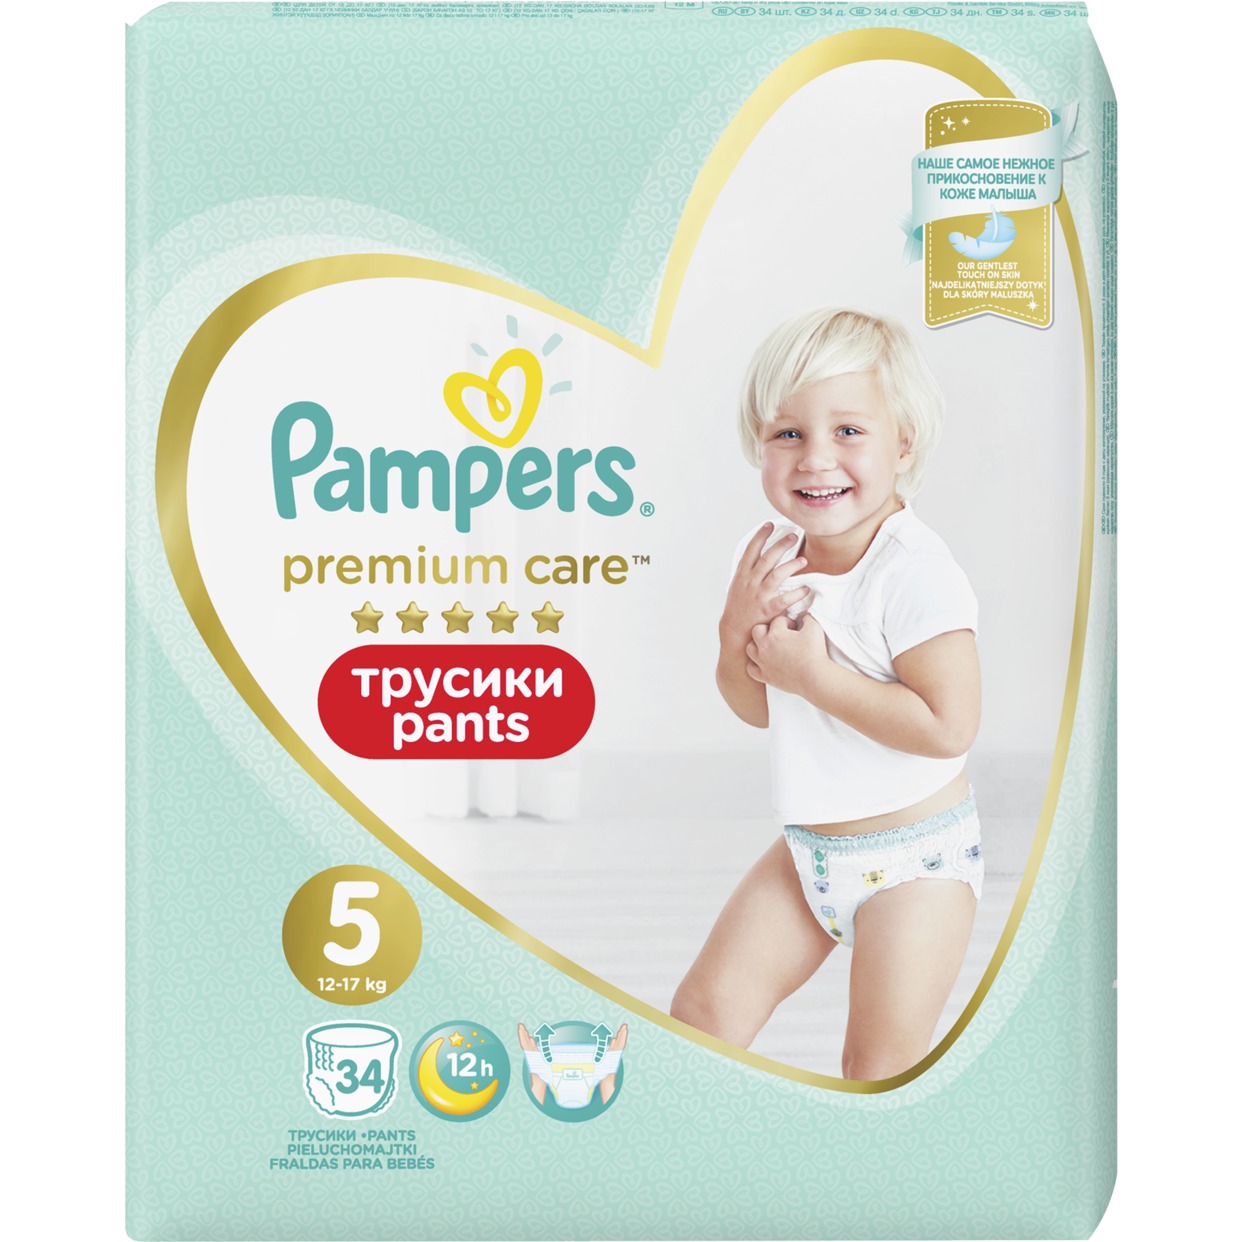 Подгузники-трусики Pampers Premium Care Pants № 5 12-17 кг 34 шт.